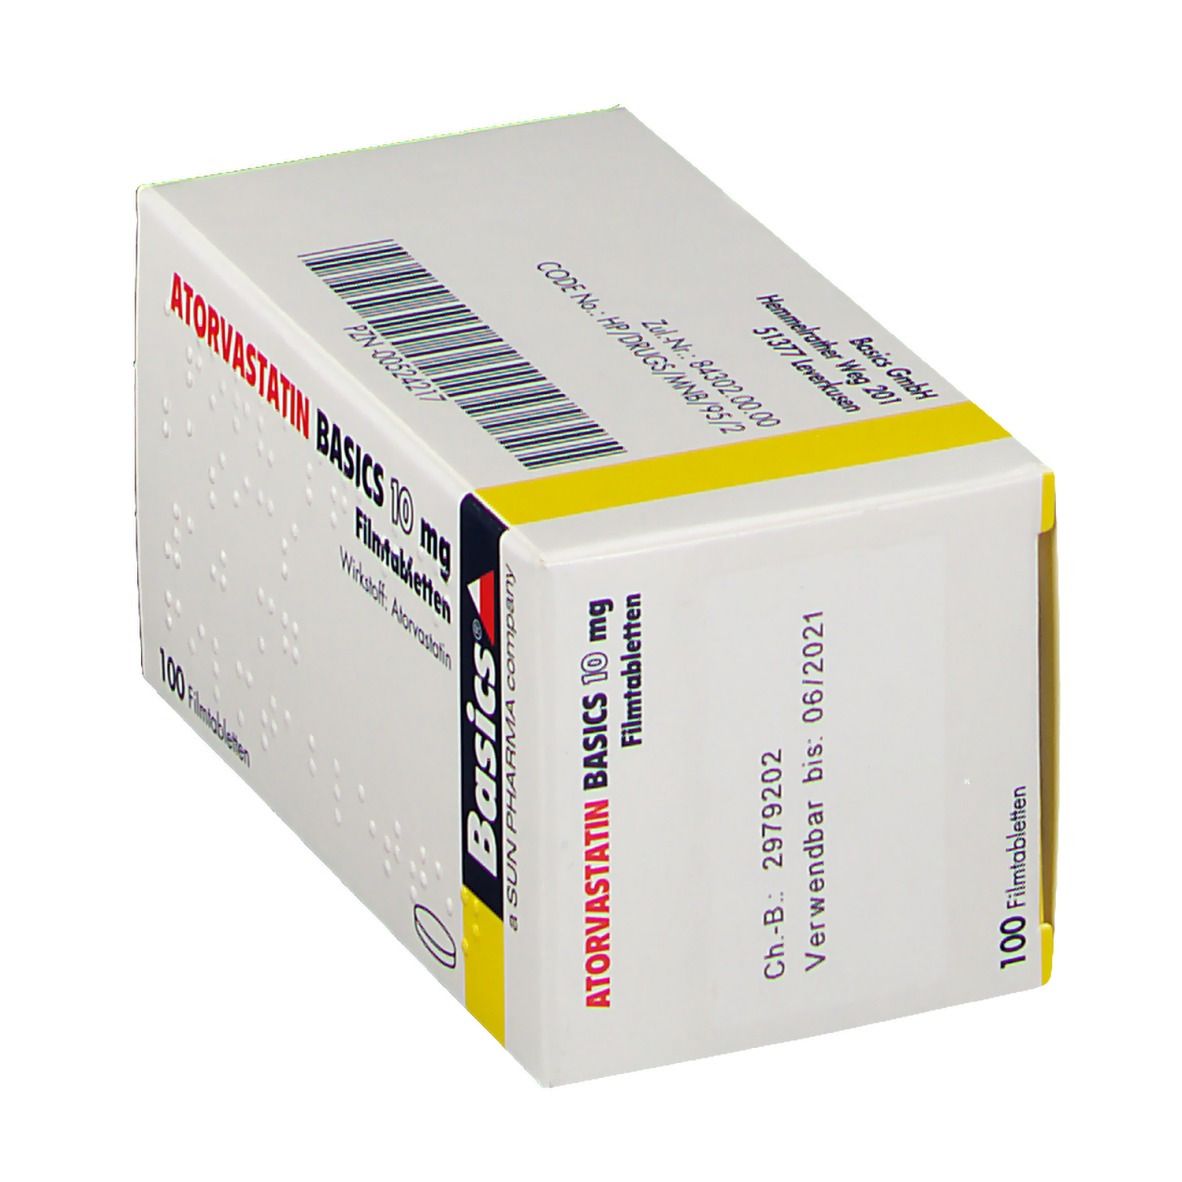 ATORVASTATIN BASICS 10 mg